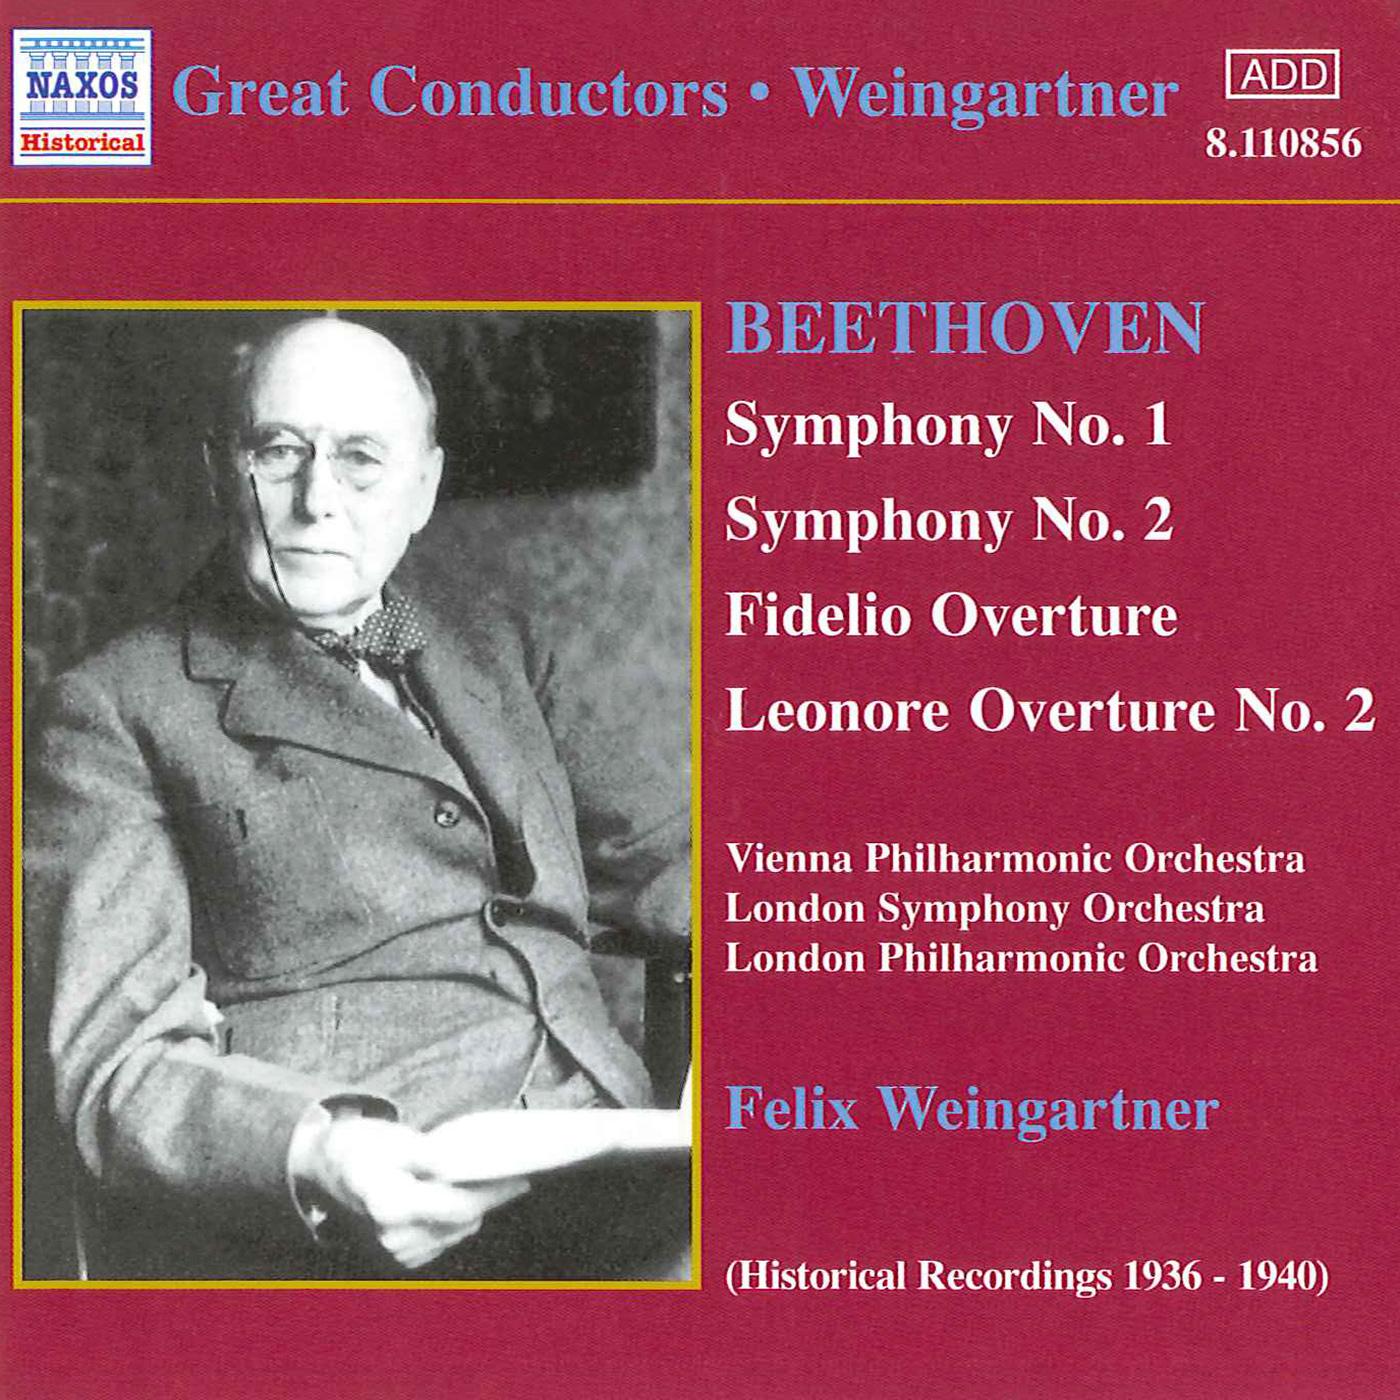 BEETHOVEN: Symphonies Nos. 1 and 2 (Weingartner) (1935, 1938)